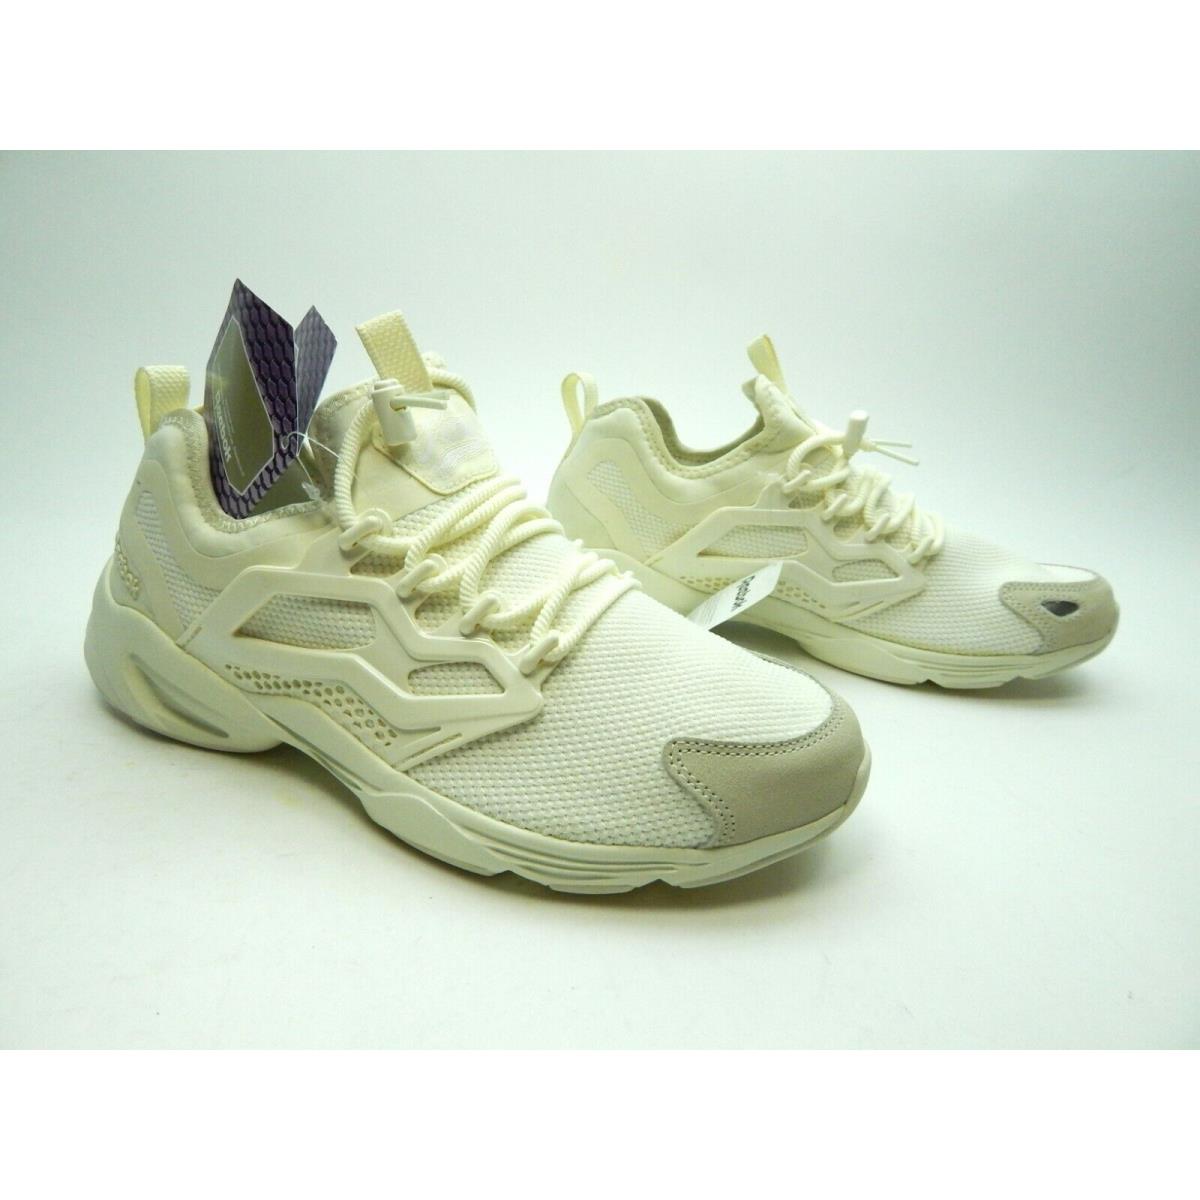 Reebok shoes  - WHITE CREAM 6